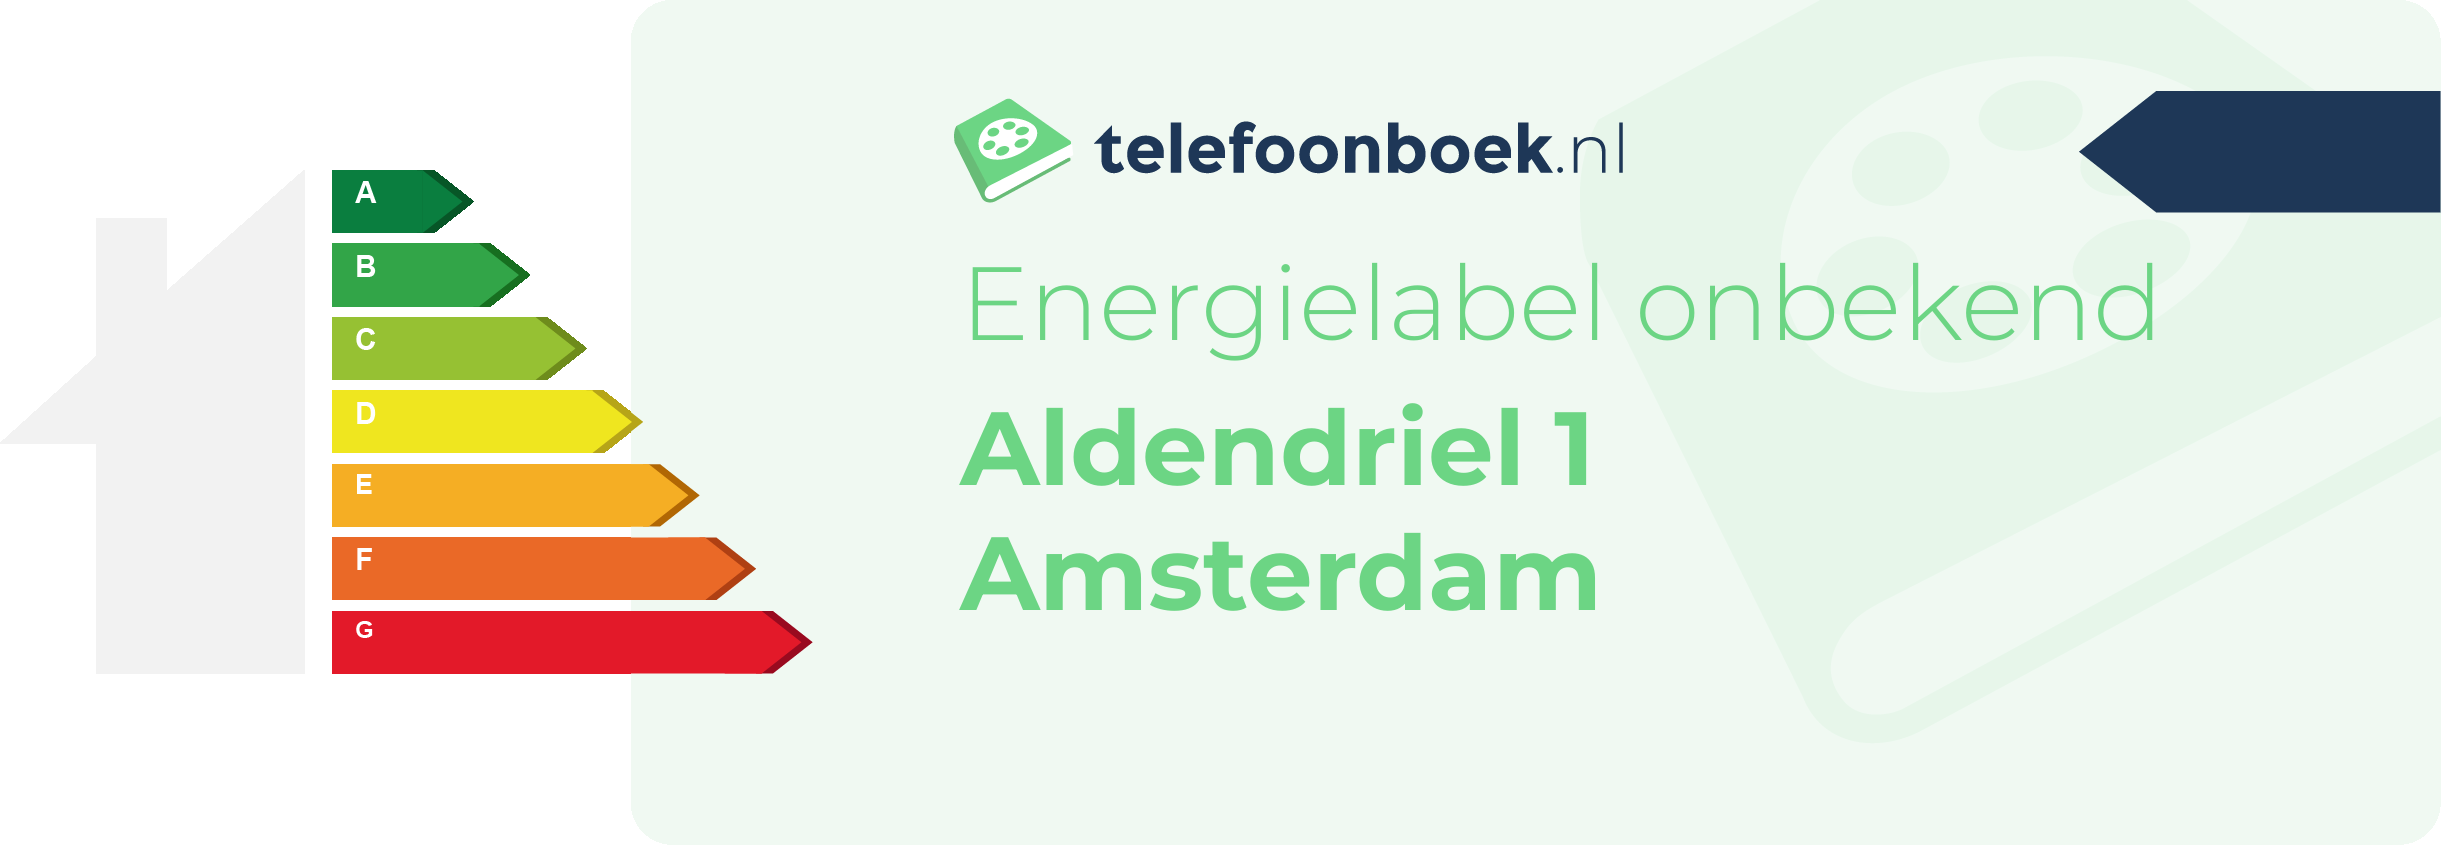 Energielabel Aldendriel 1 Amsterdam